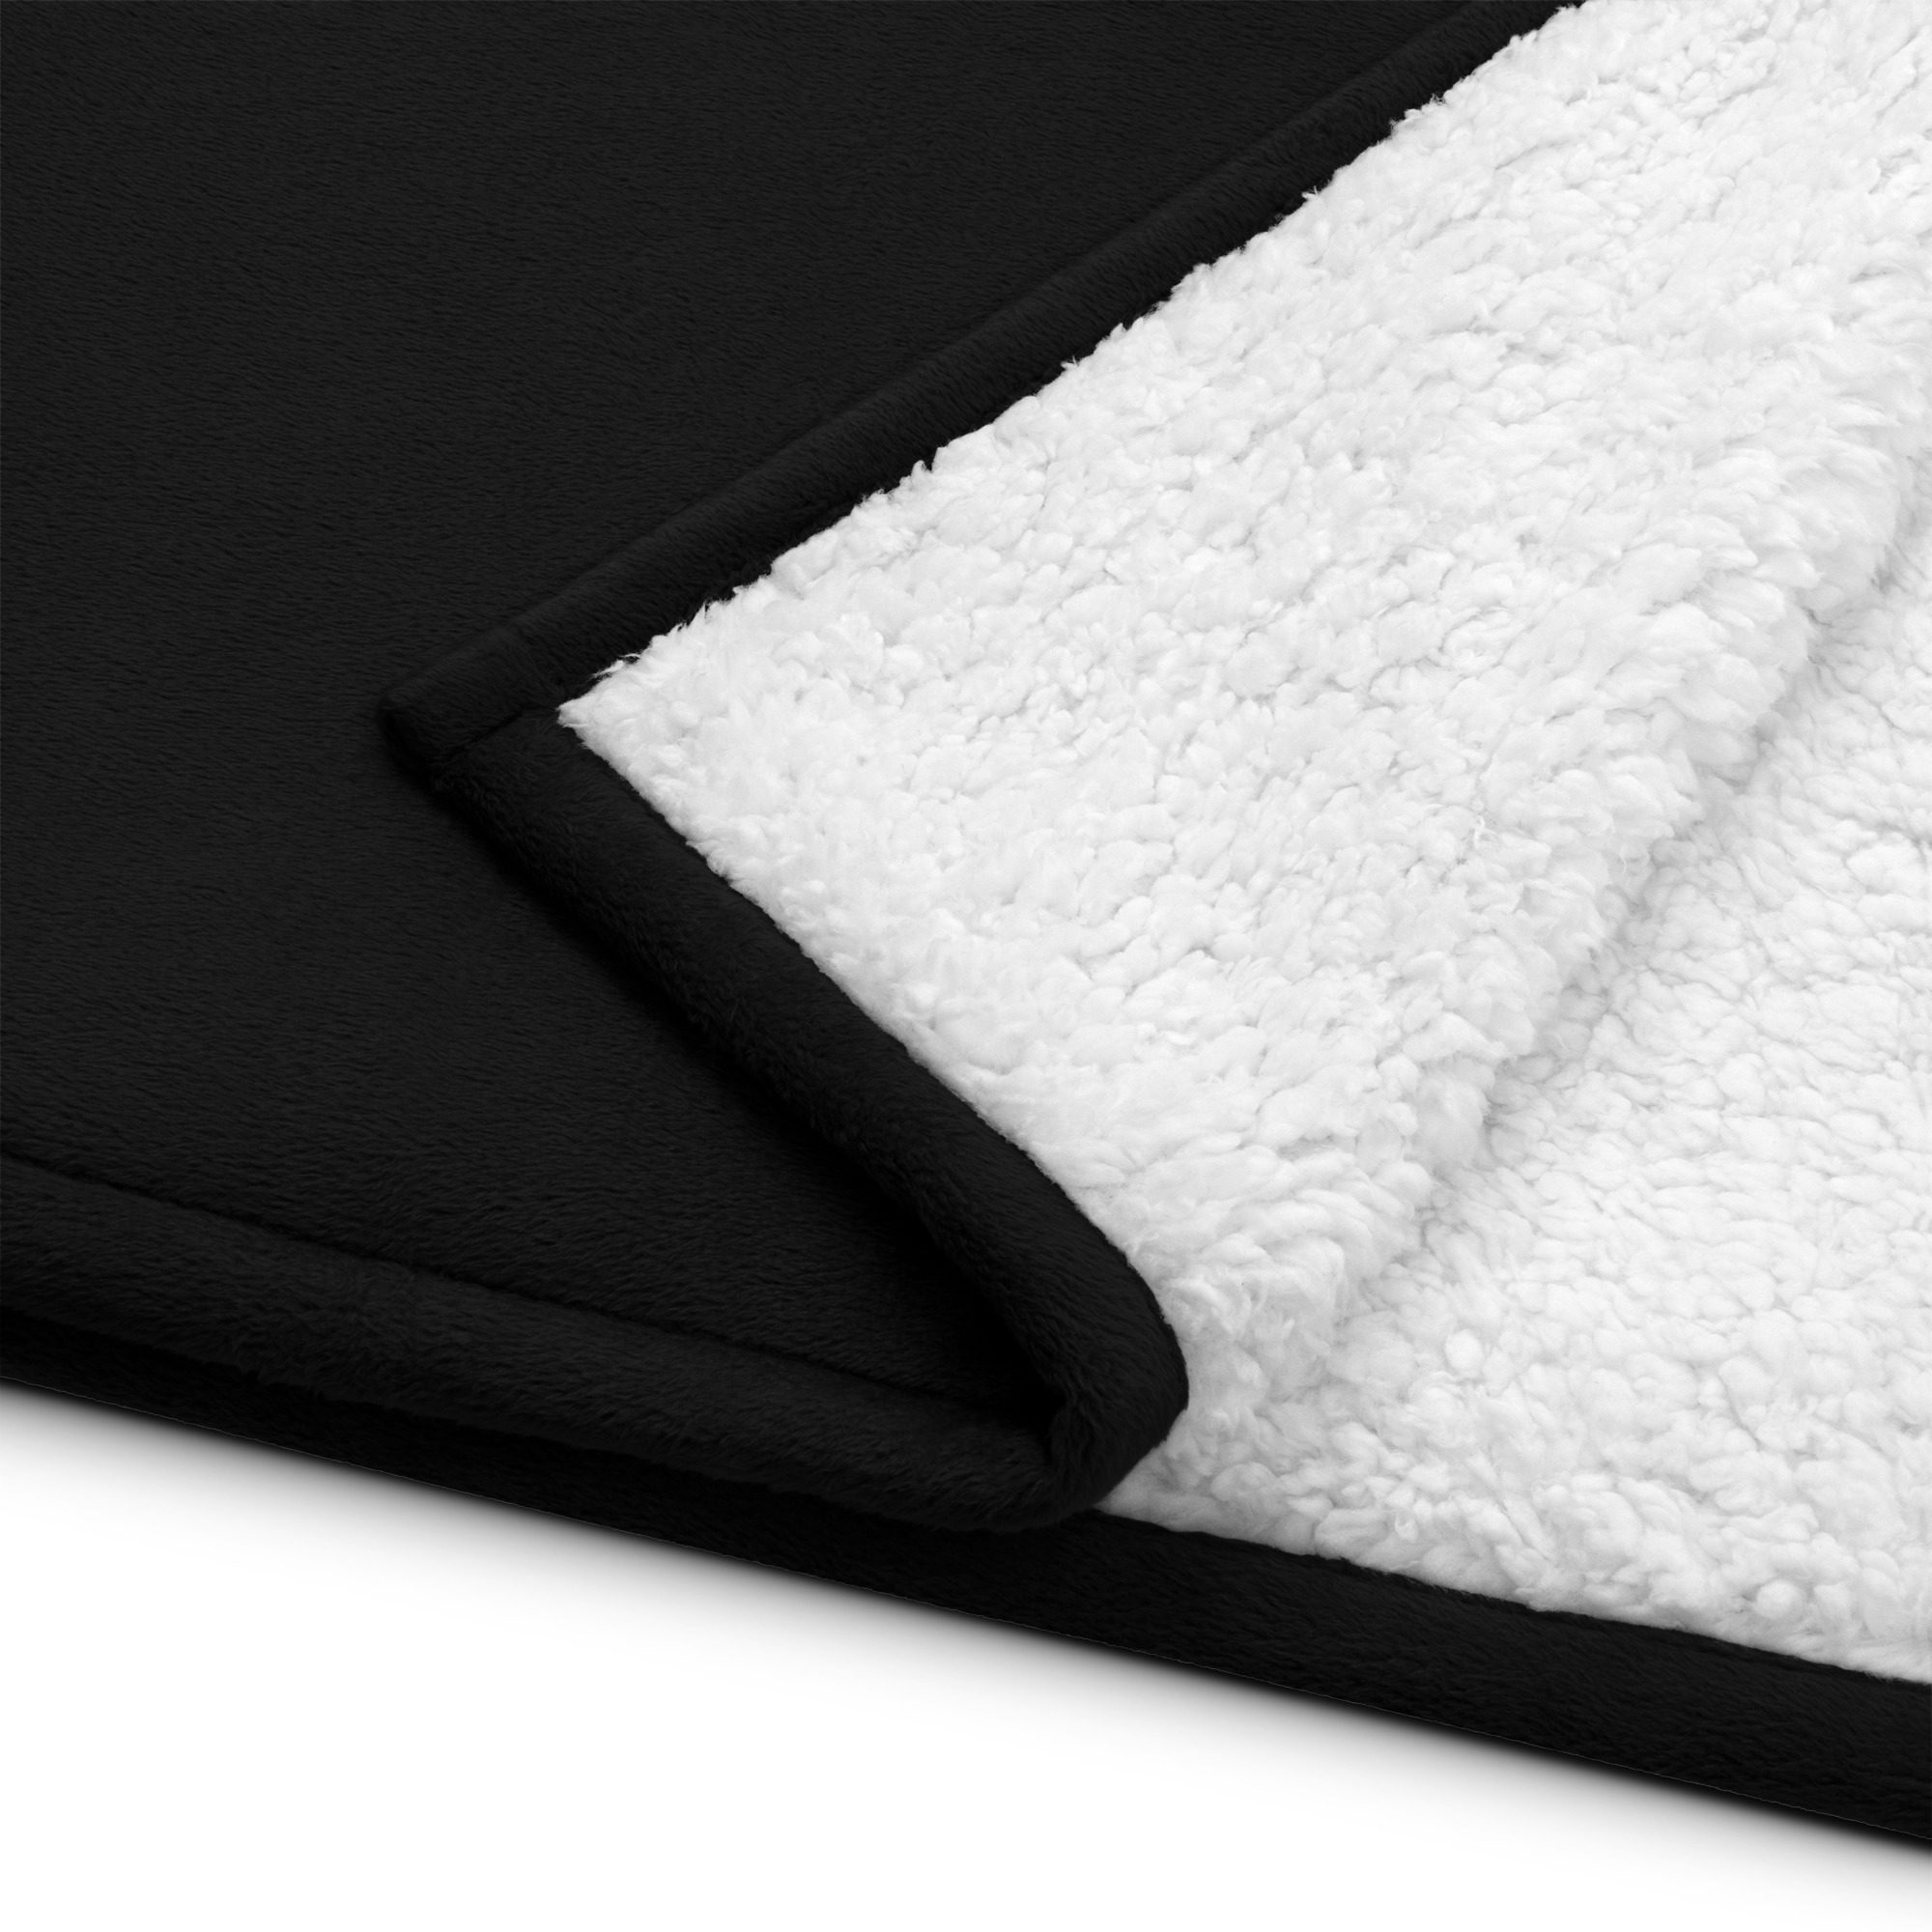 embroidered premium sherpa blanket black product details 2 6526c33dda73f